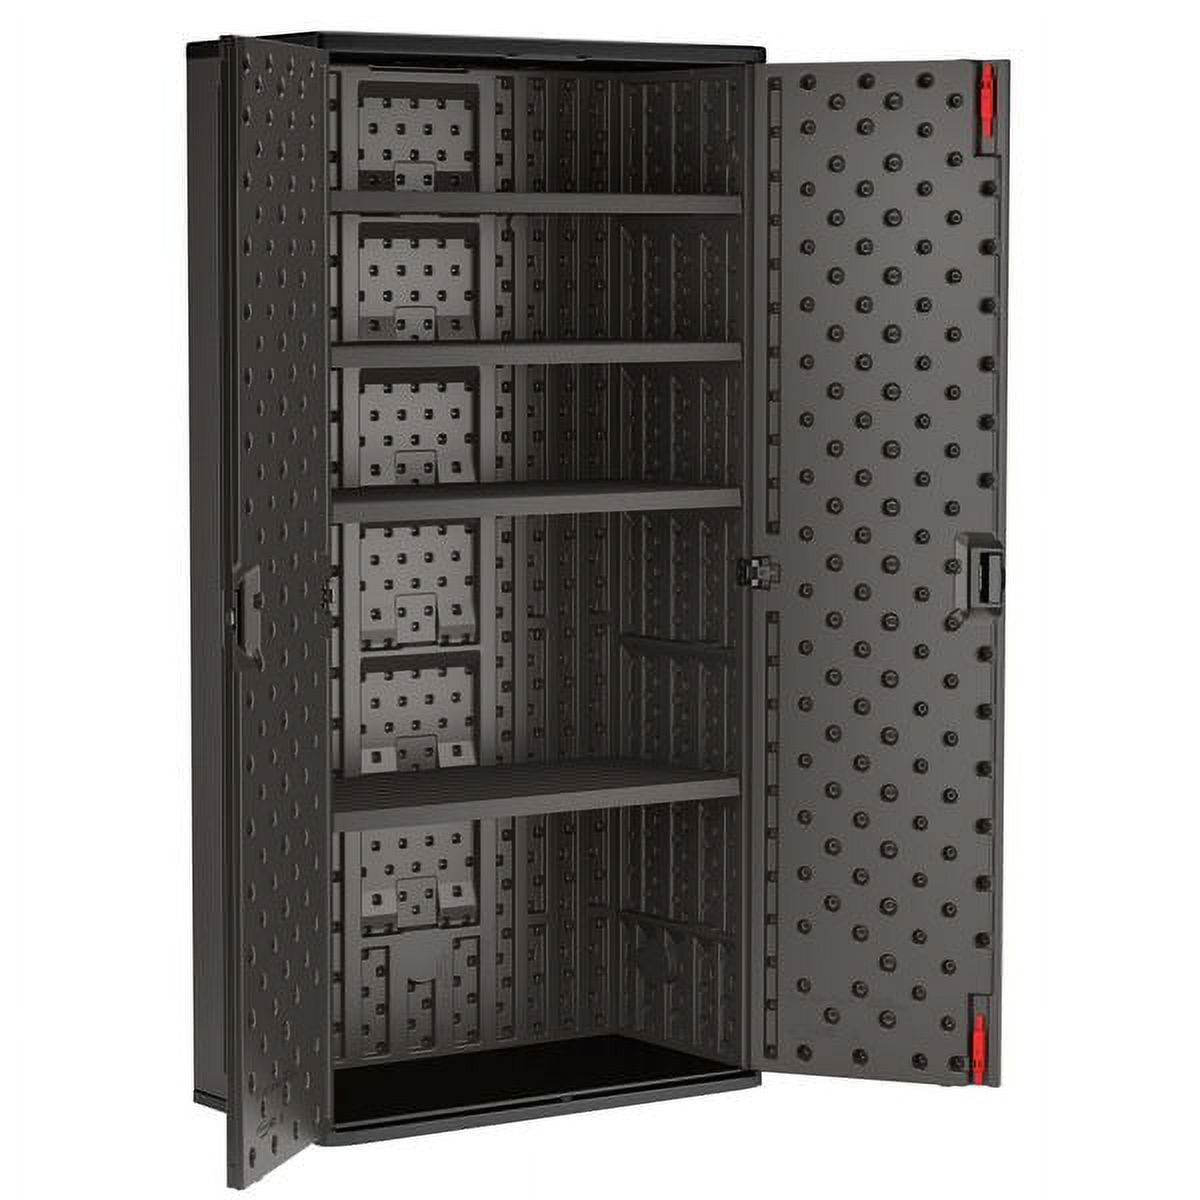 Suncast 80-inch x 40-inch 4-Shelf Storage Cabinet Locker, Black, Resin, Garage Cabinet - image 2 of 3